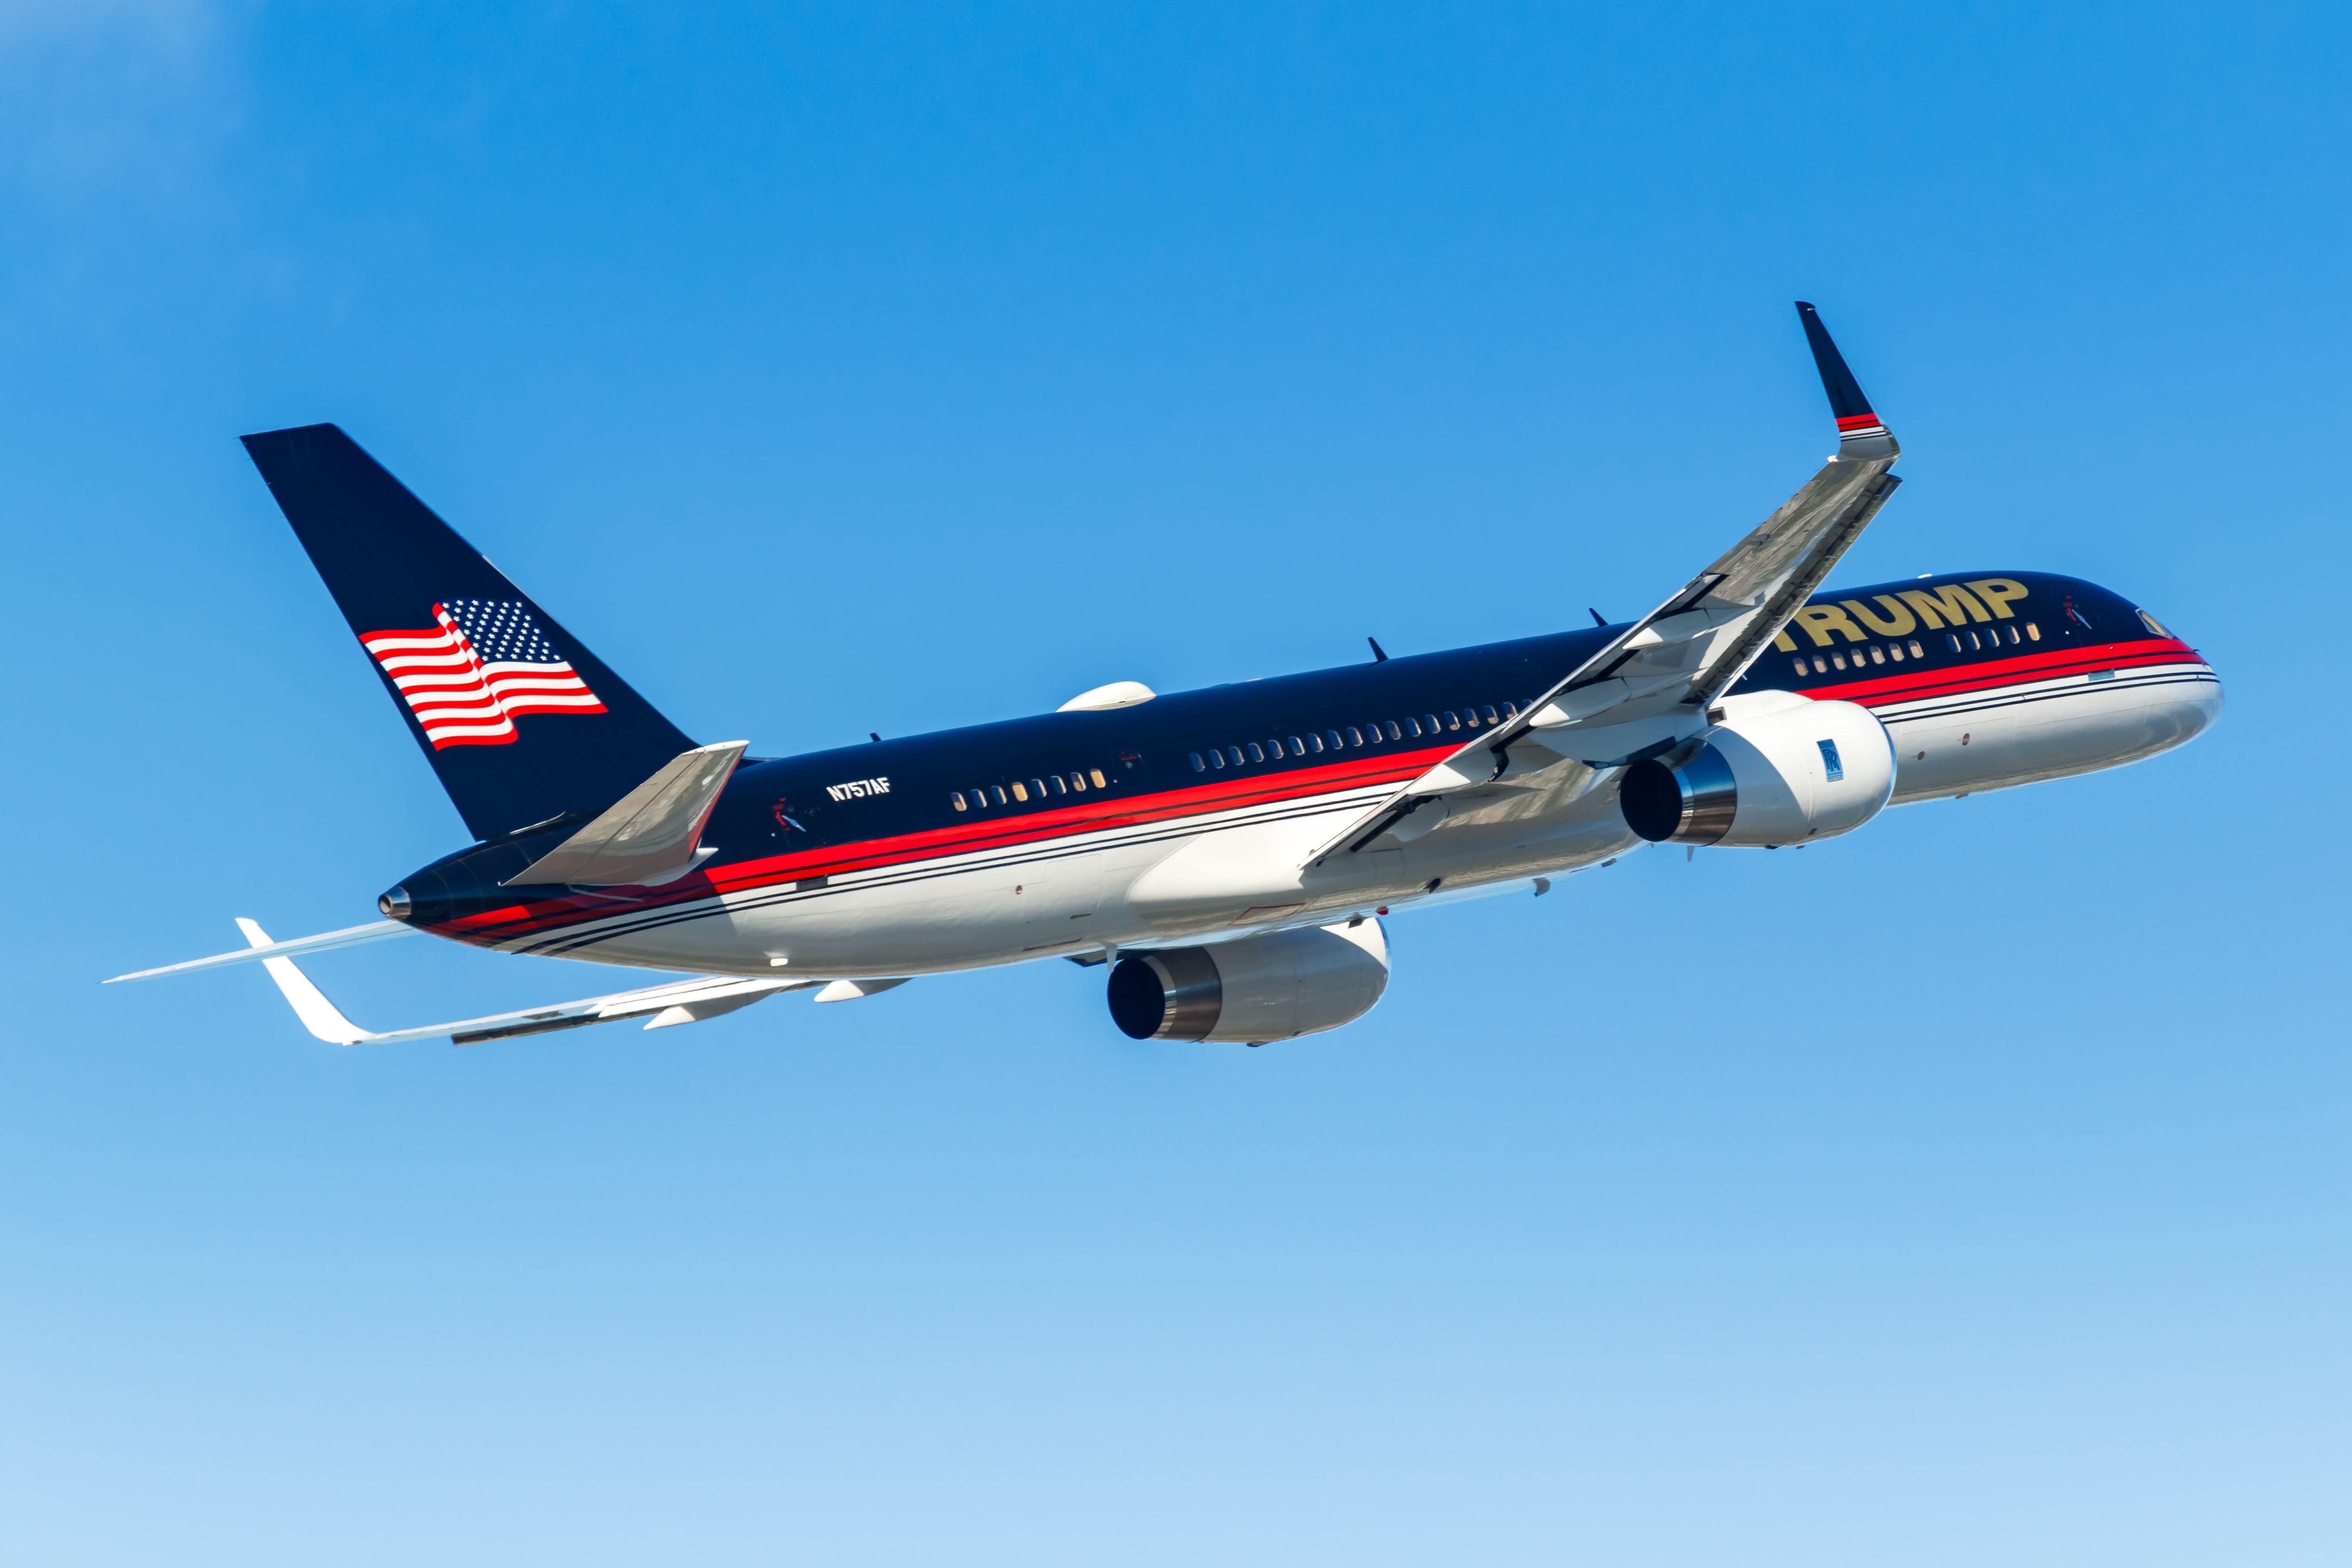 A Donald Trump Boeing 757 